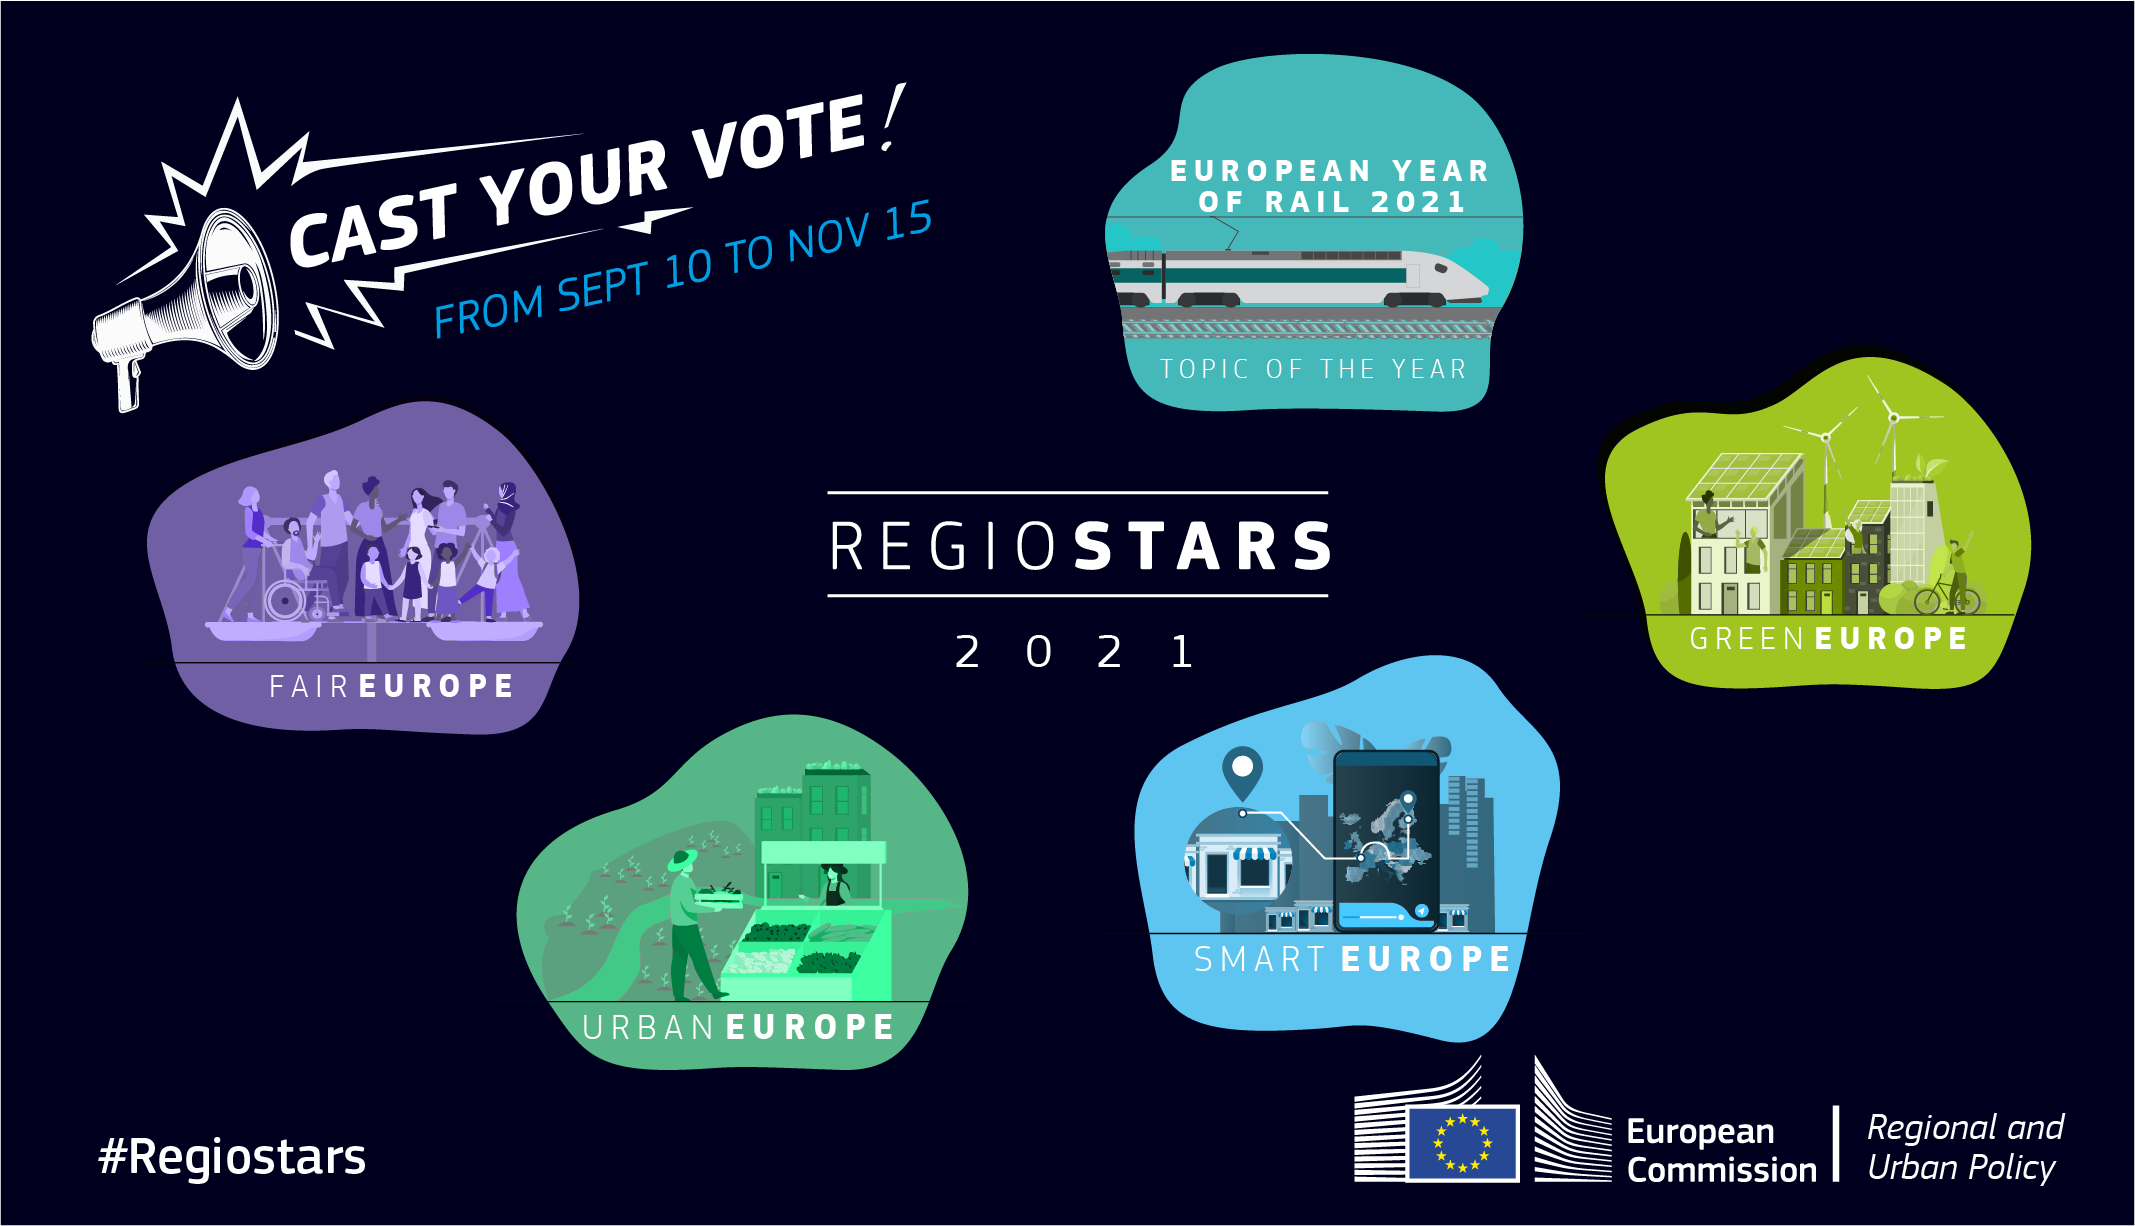 Regiostars 2021 - Cast Your Vote!